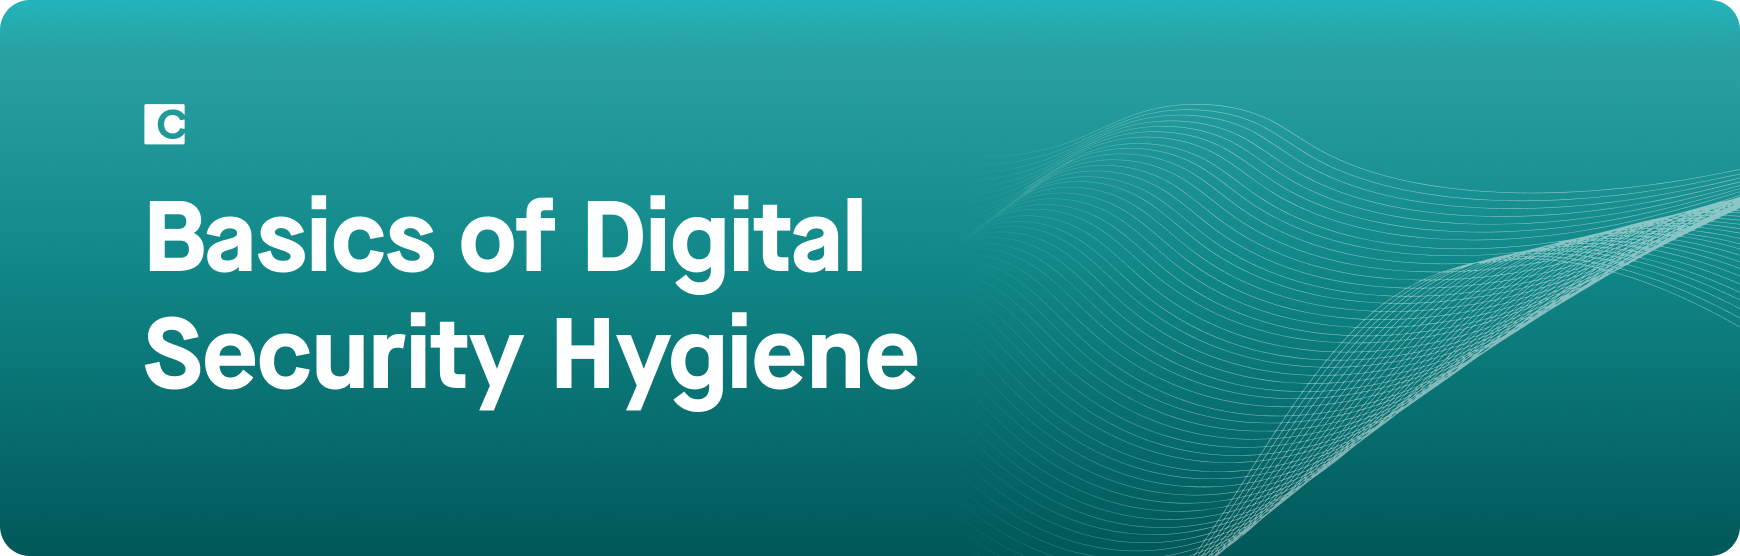 Basics_of_Digital_Security_Hygiene.png